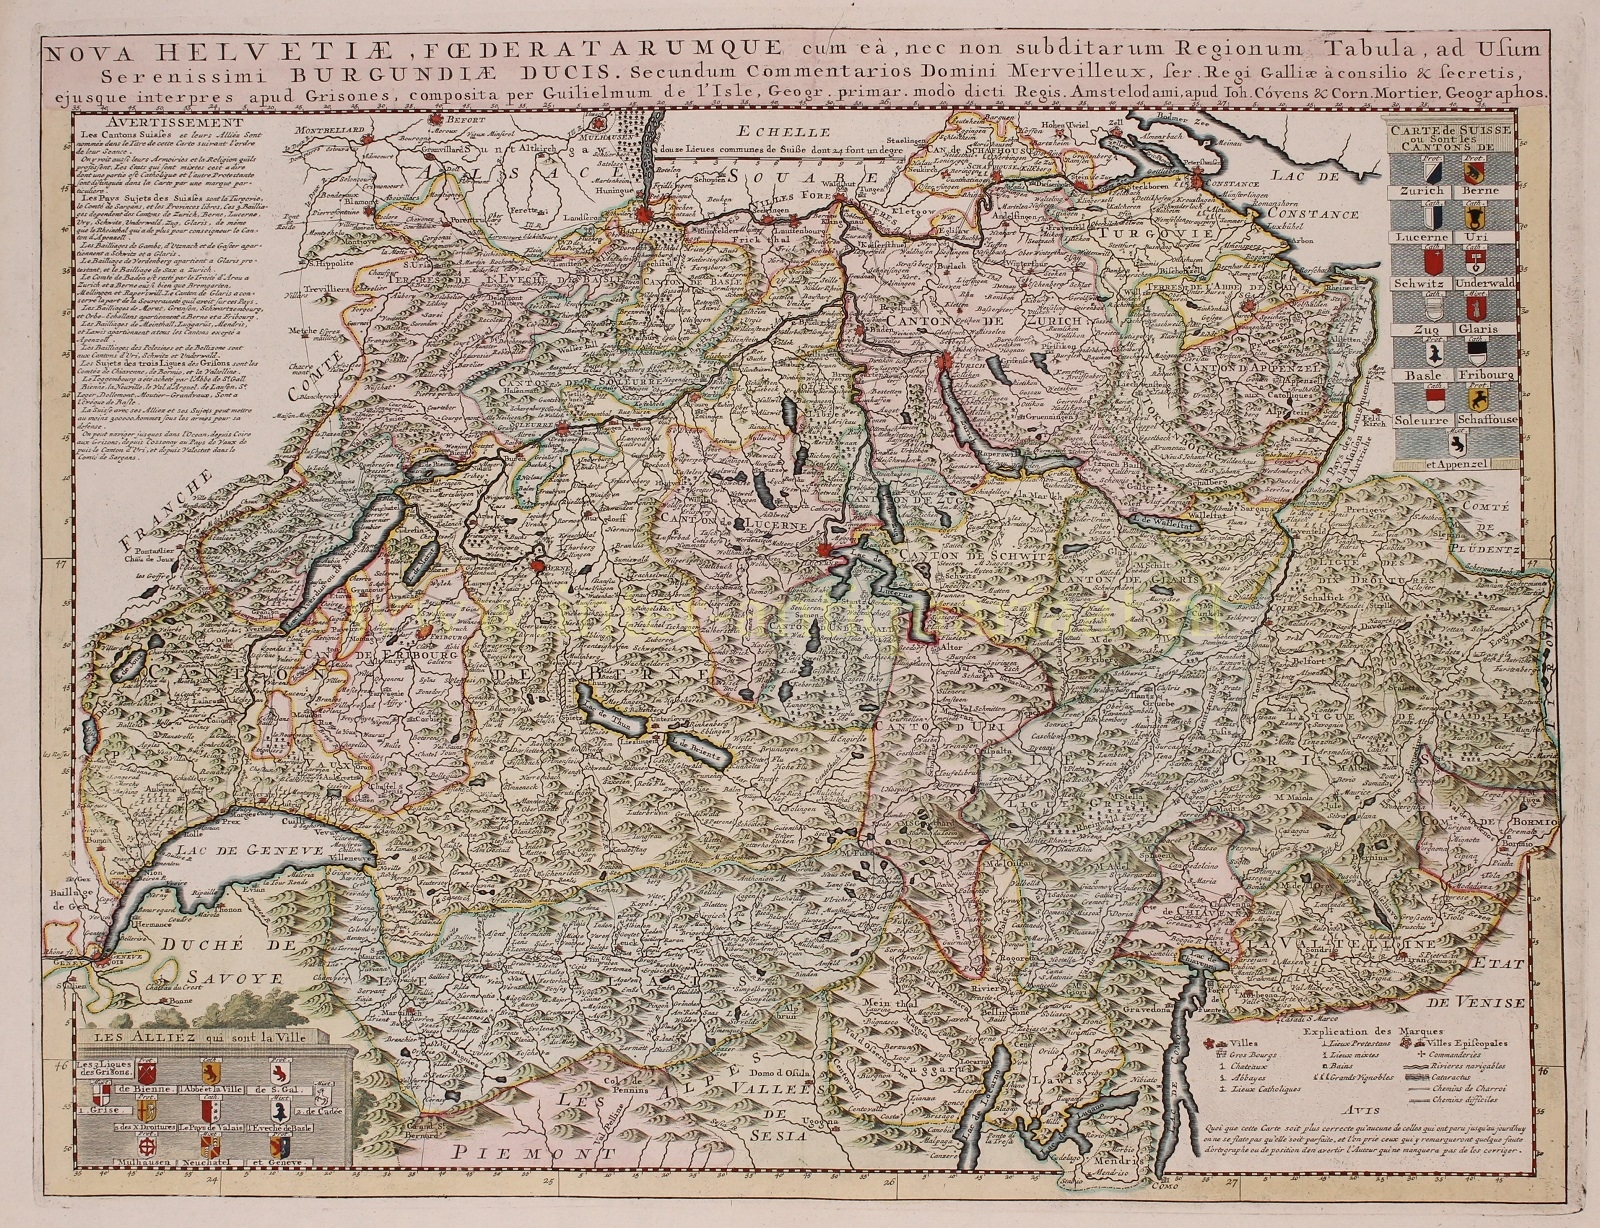 Covens & Mortier - Switserland - Guillaume De lIsle / Covens & Mortier, c. 1758